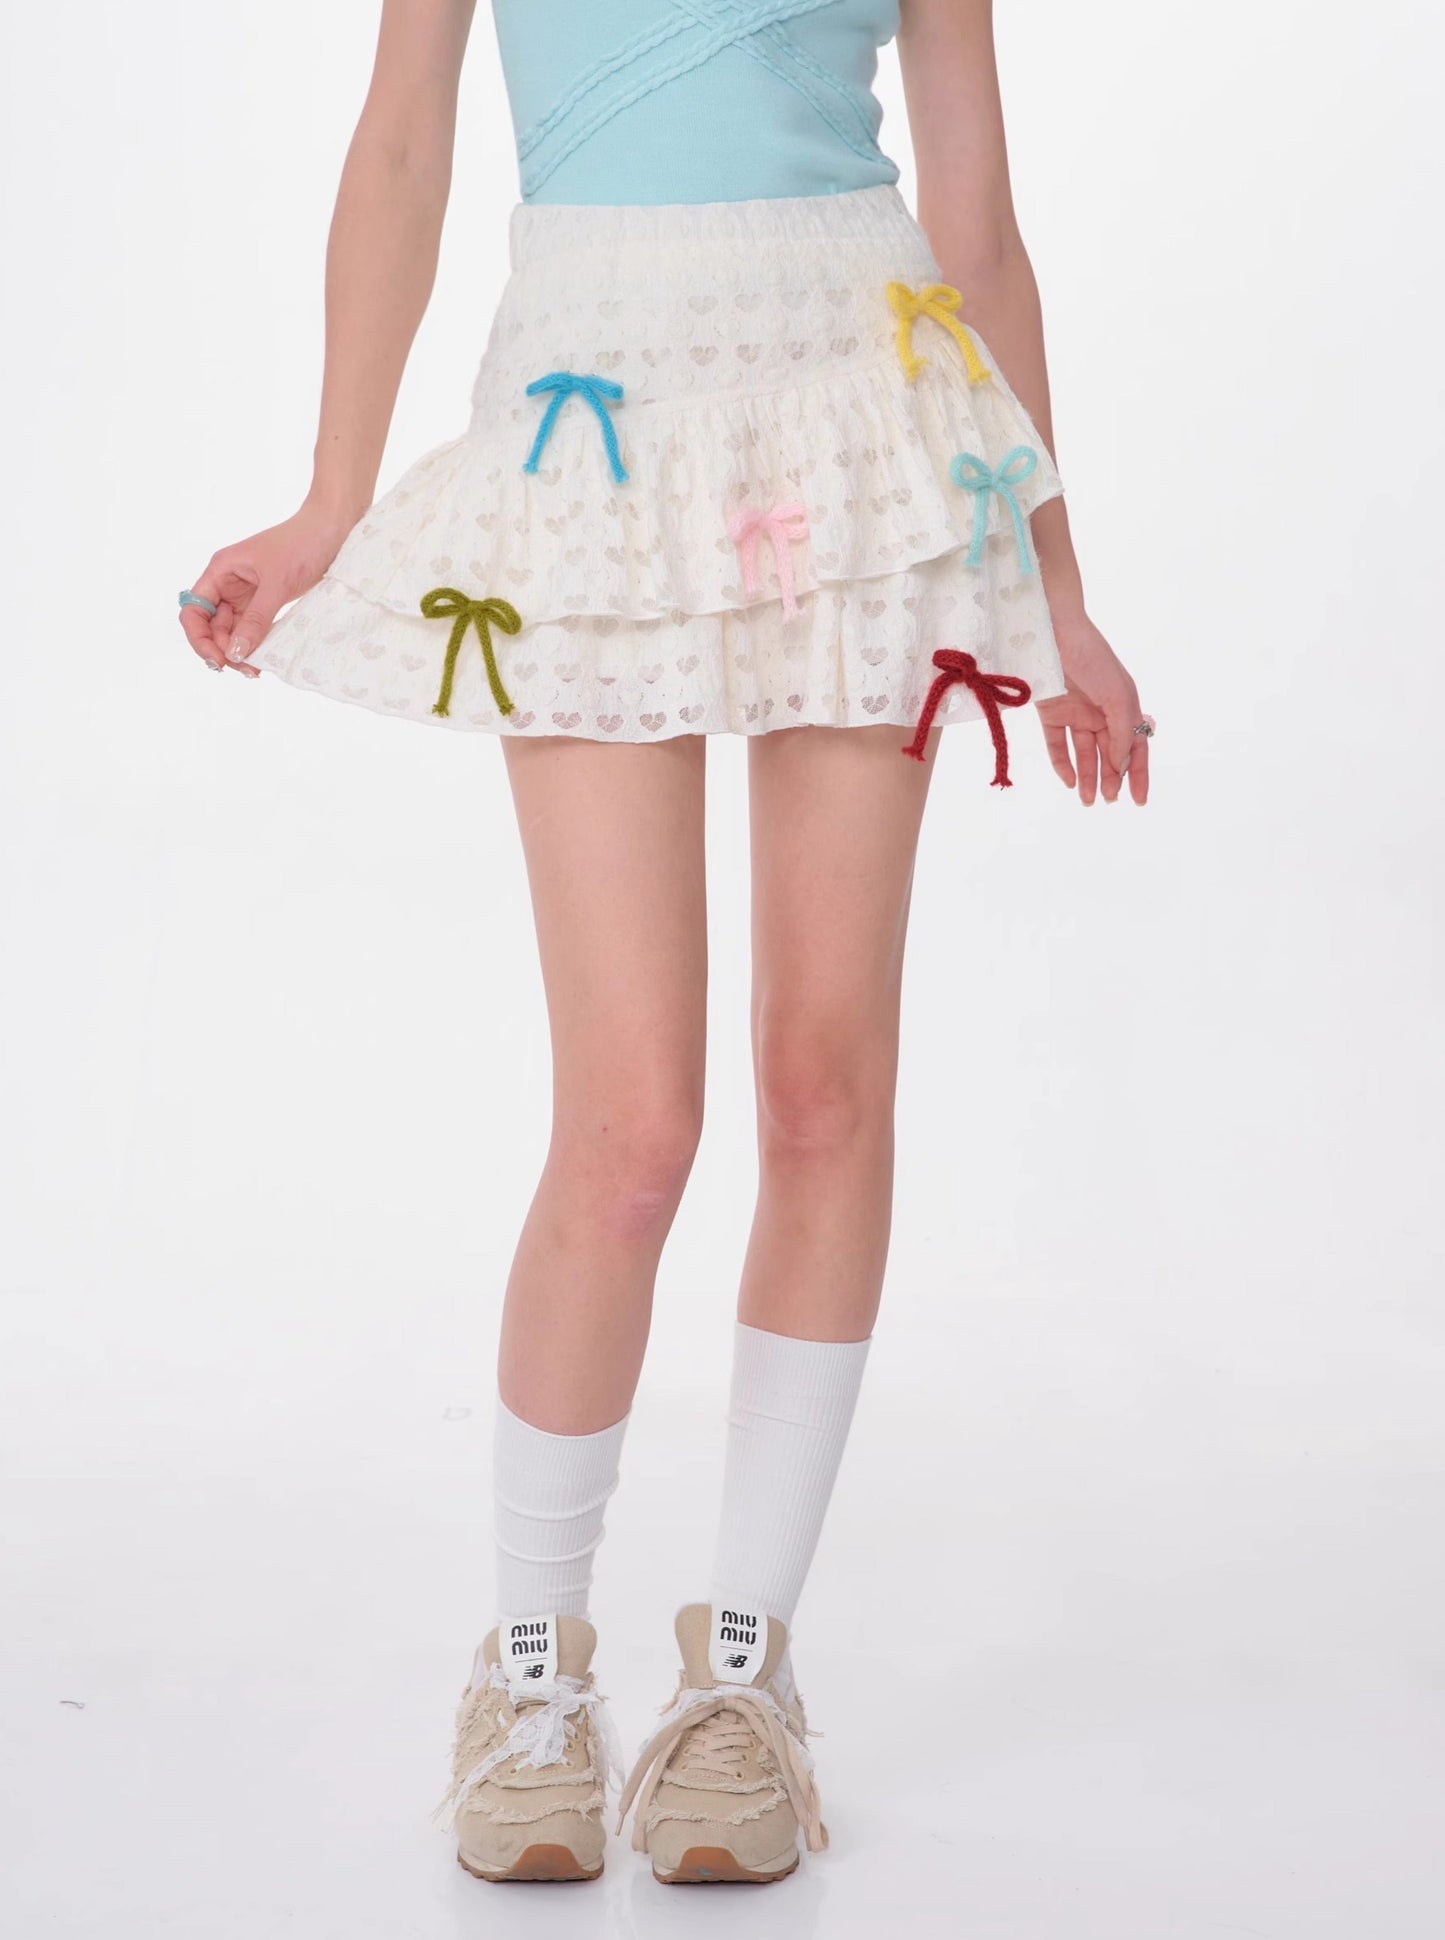 Heart Cut Out Design Senseline Cake Skirt